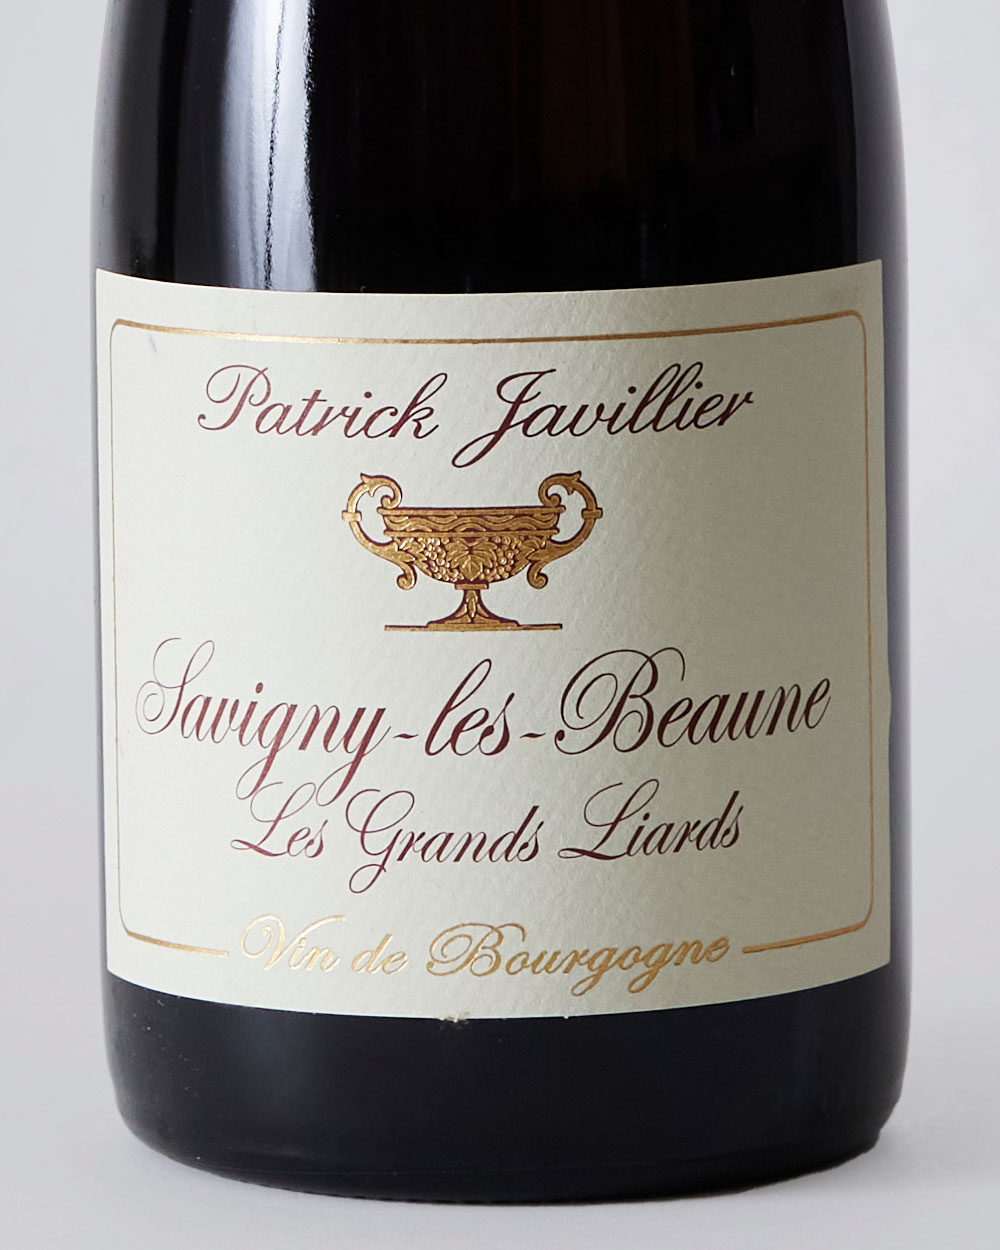 Patrick Javillier Savigny-les-Beaune Les-Grands Liards Bourgogne label